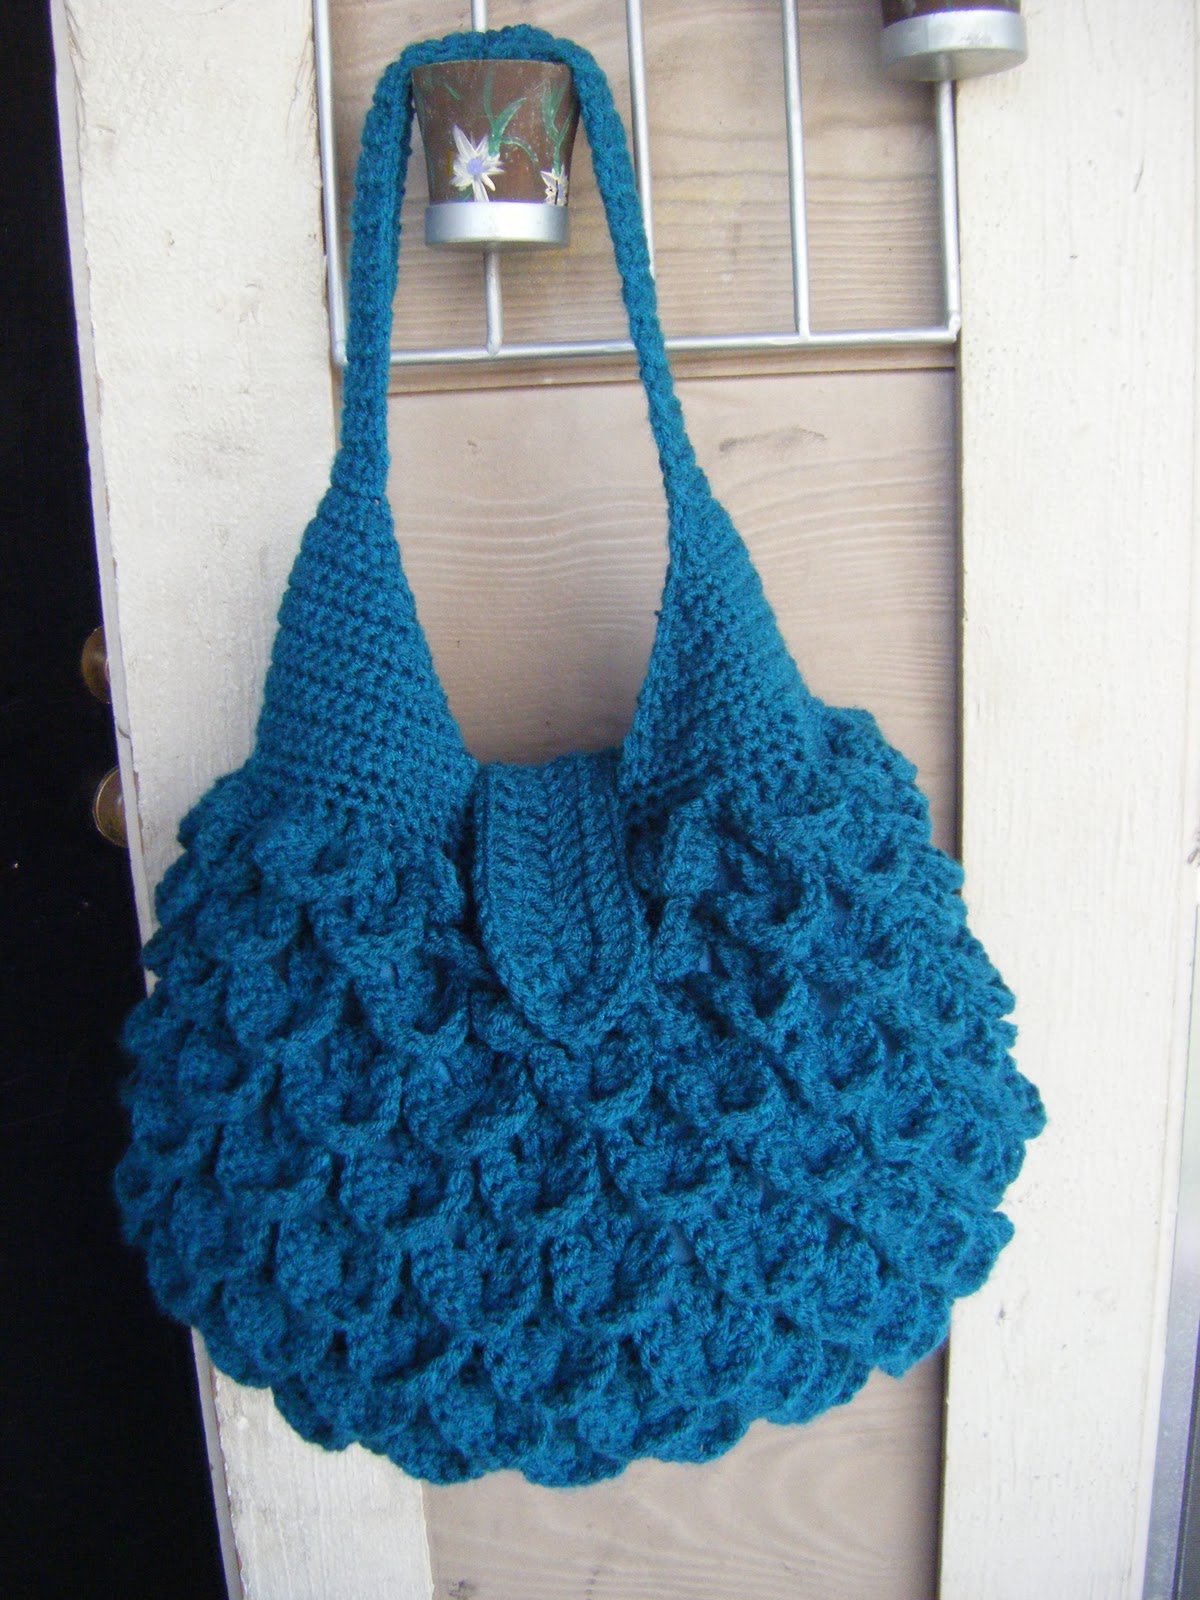 cute free crochet purse patterns free+crochet+purse+patterns+totes | crochet alheabg